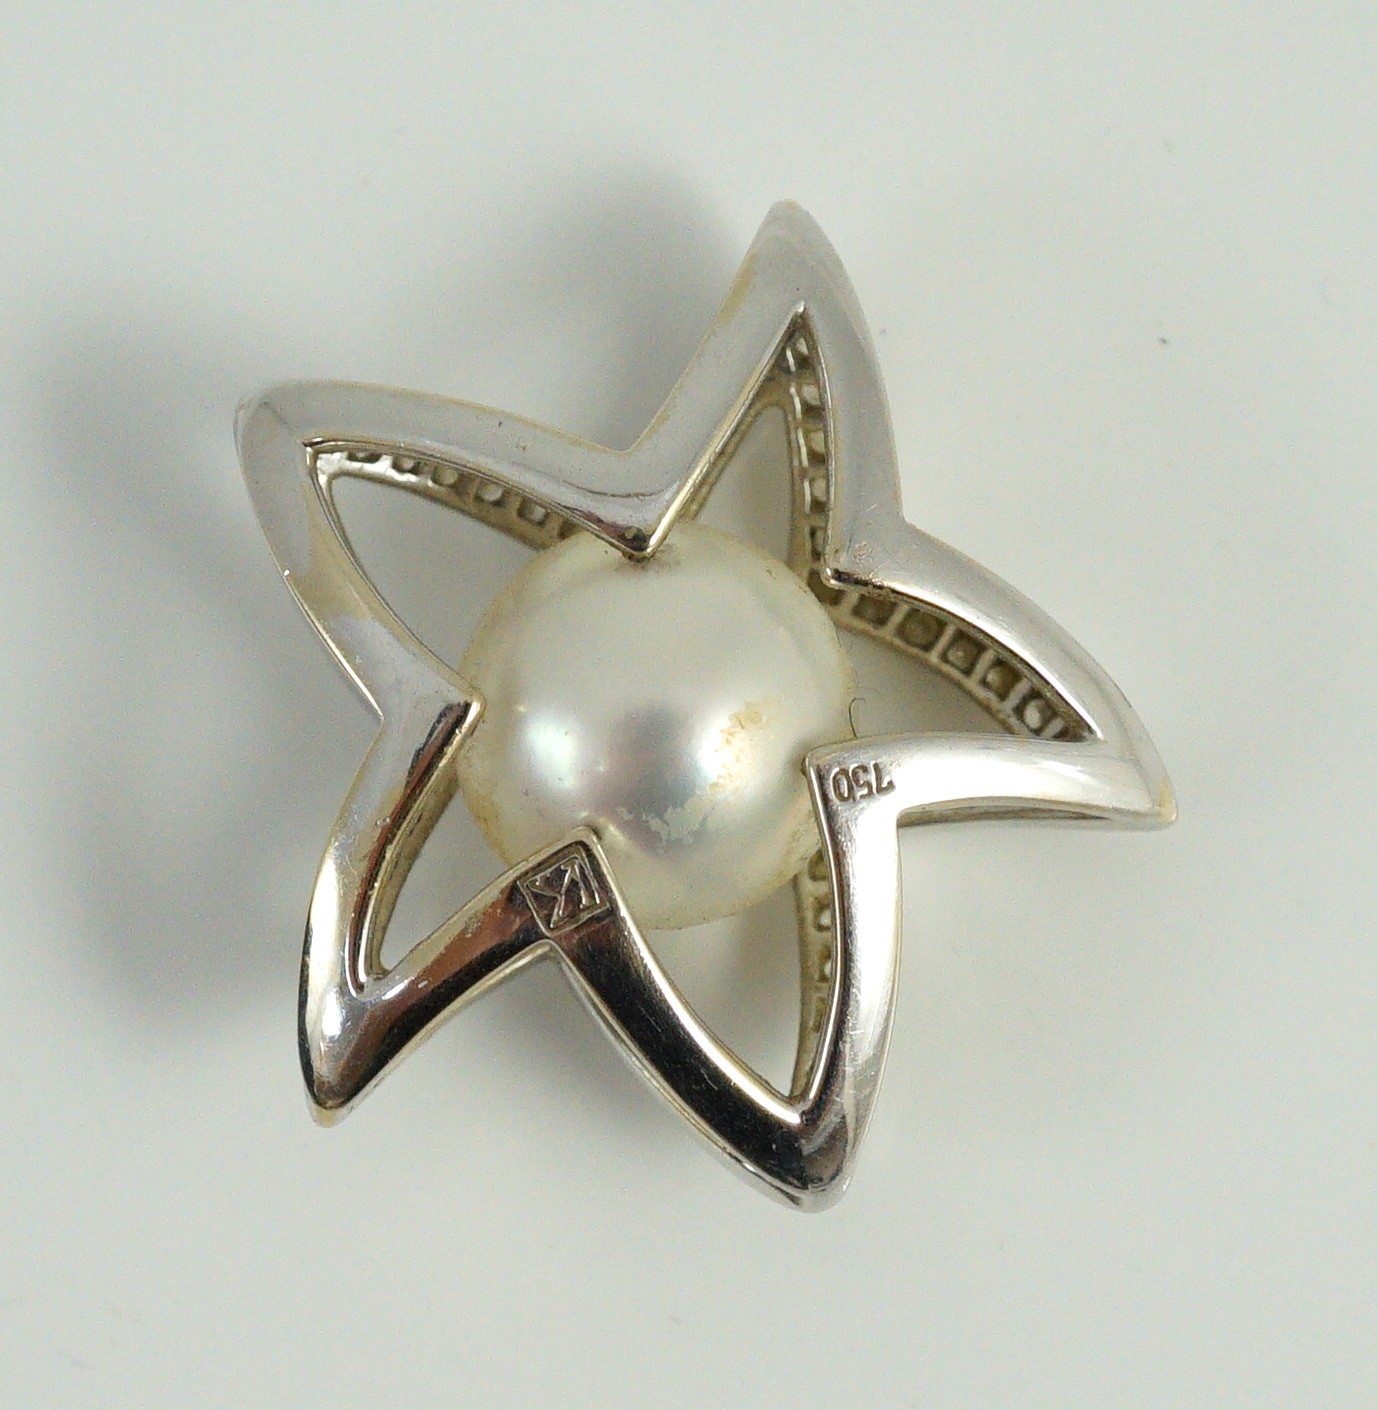 A modern Australian Kailis 18k white gold, single stone South Sea pearl and diamond chip cluster set 'Icon Star' pendant